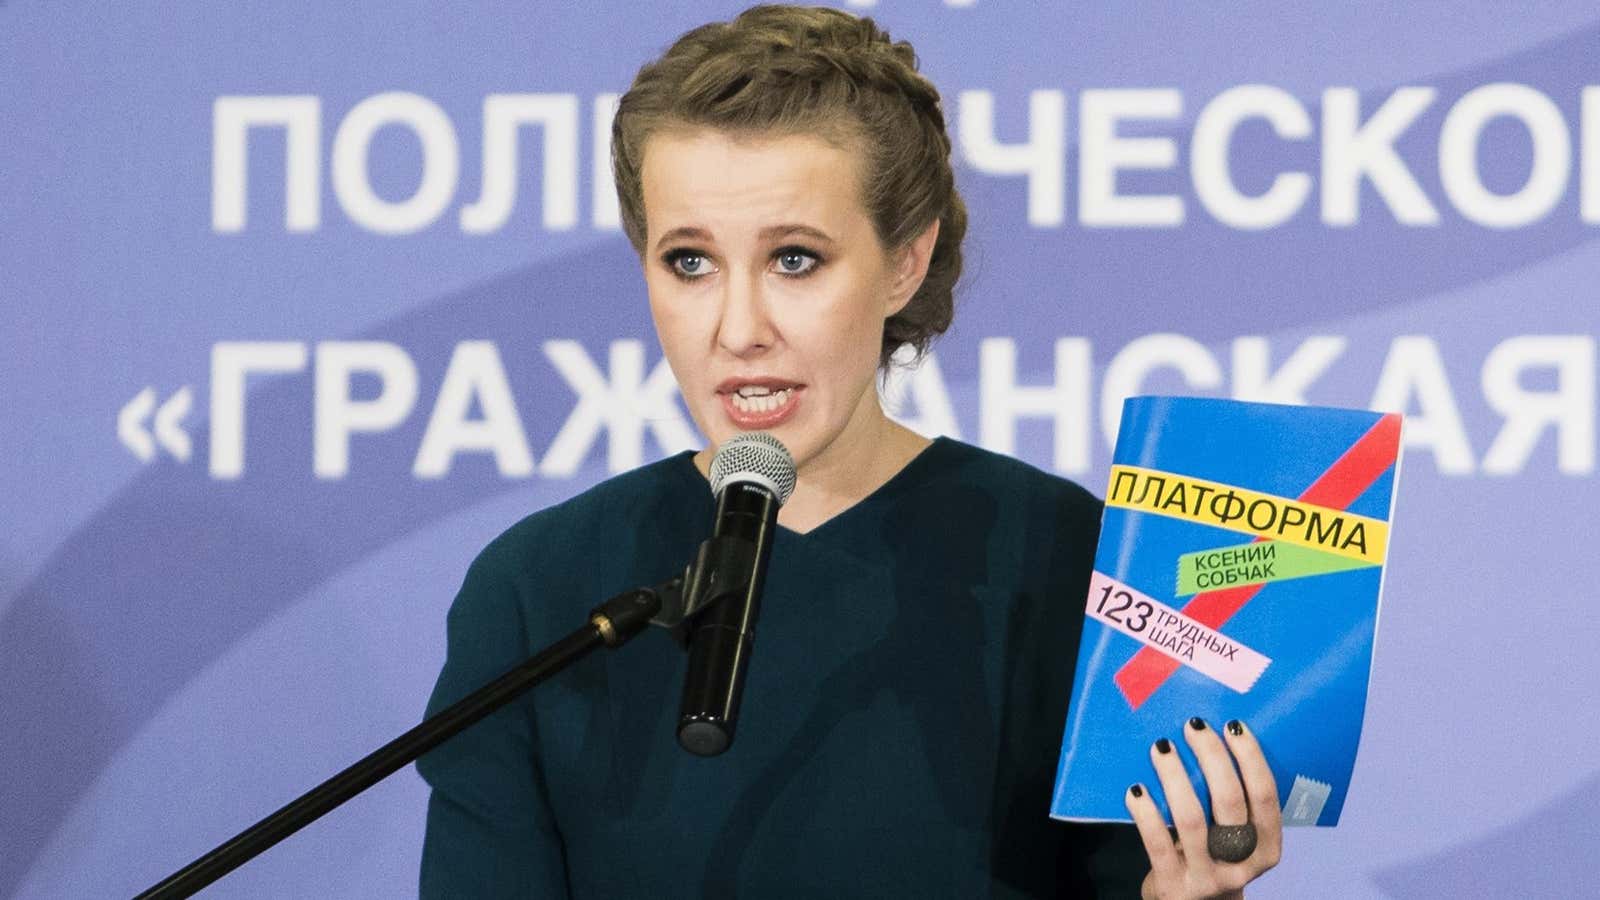 Sobchak unveils her 123-step policy program.